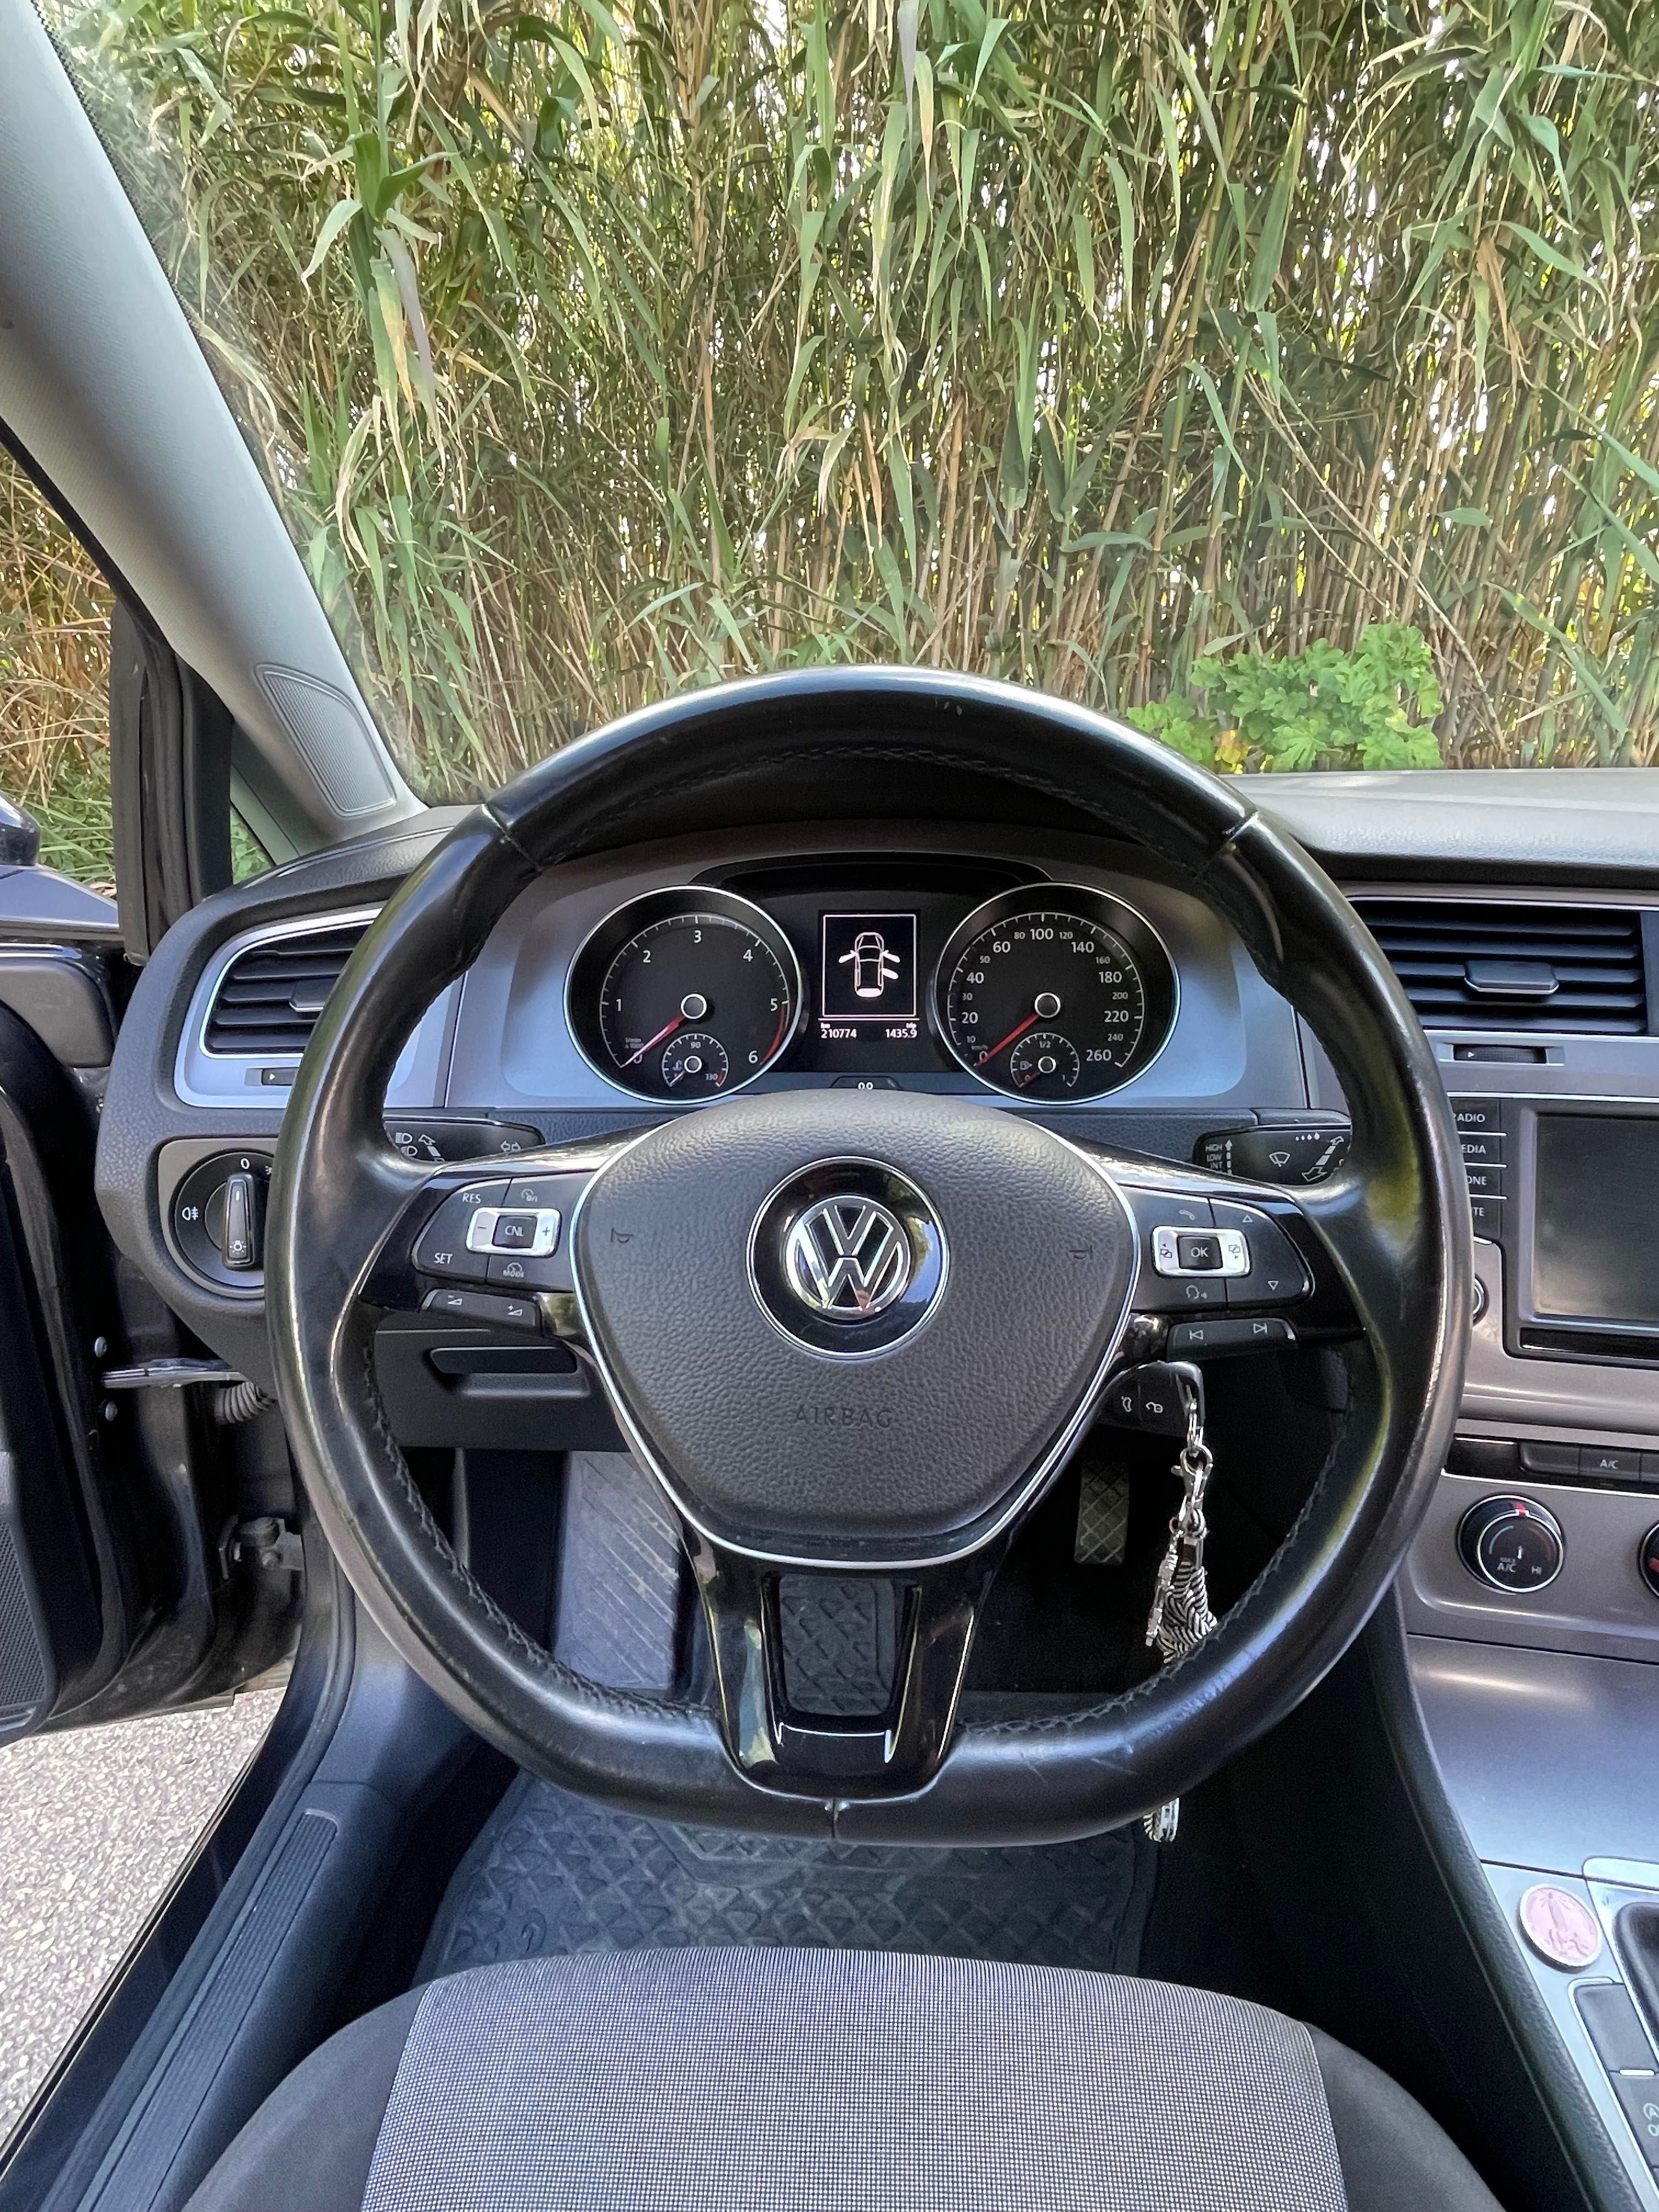 VW Golf 1.6 TDi Bluemotion Confortline